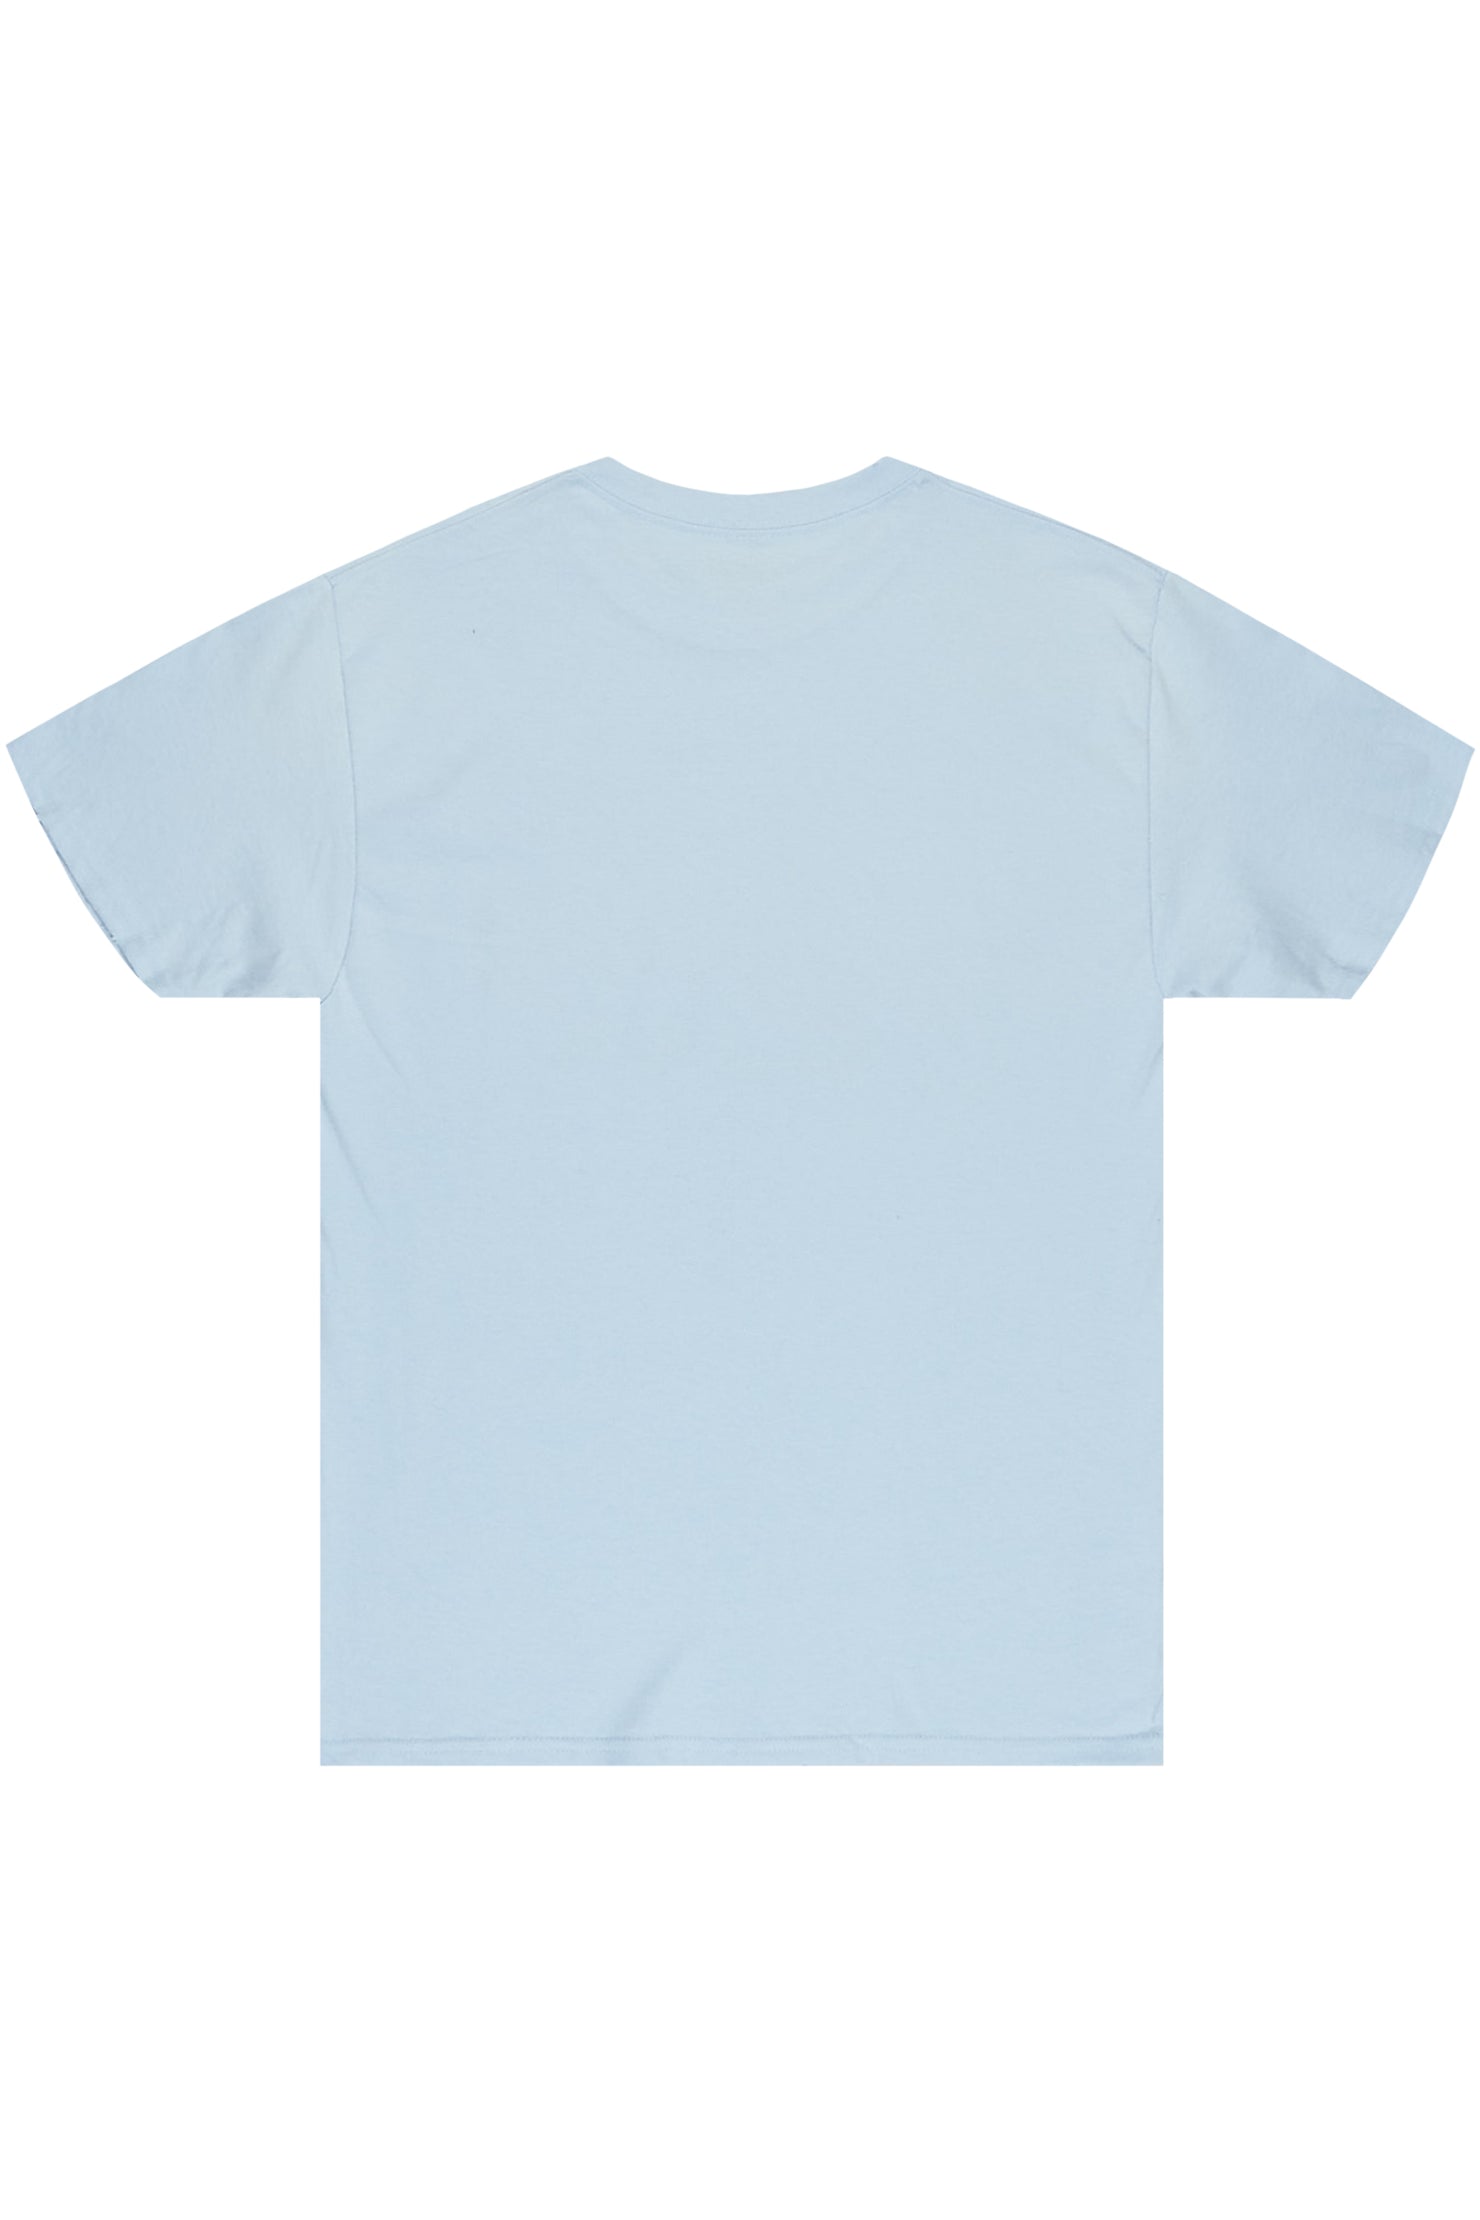 Zustrand Light Blue Graphic T-Shirt– Rockstar Original